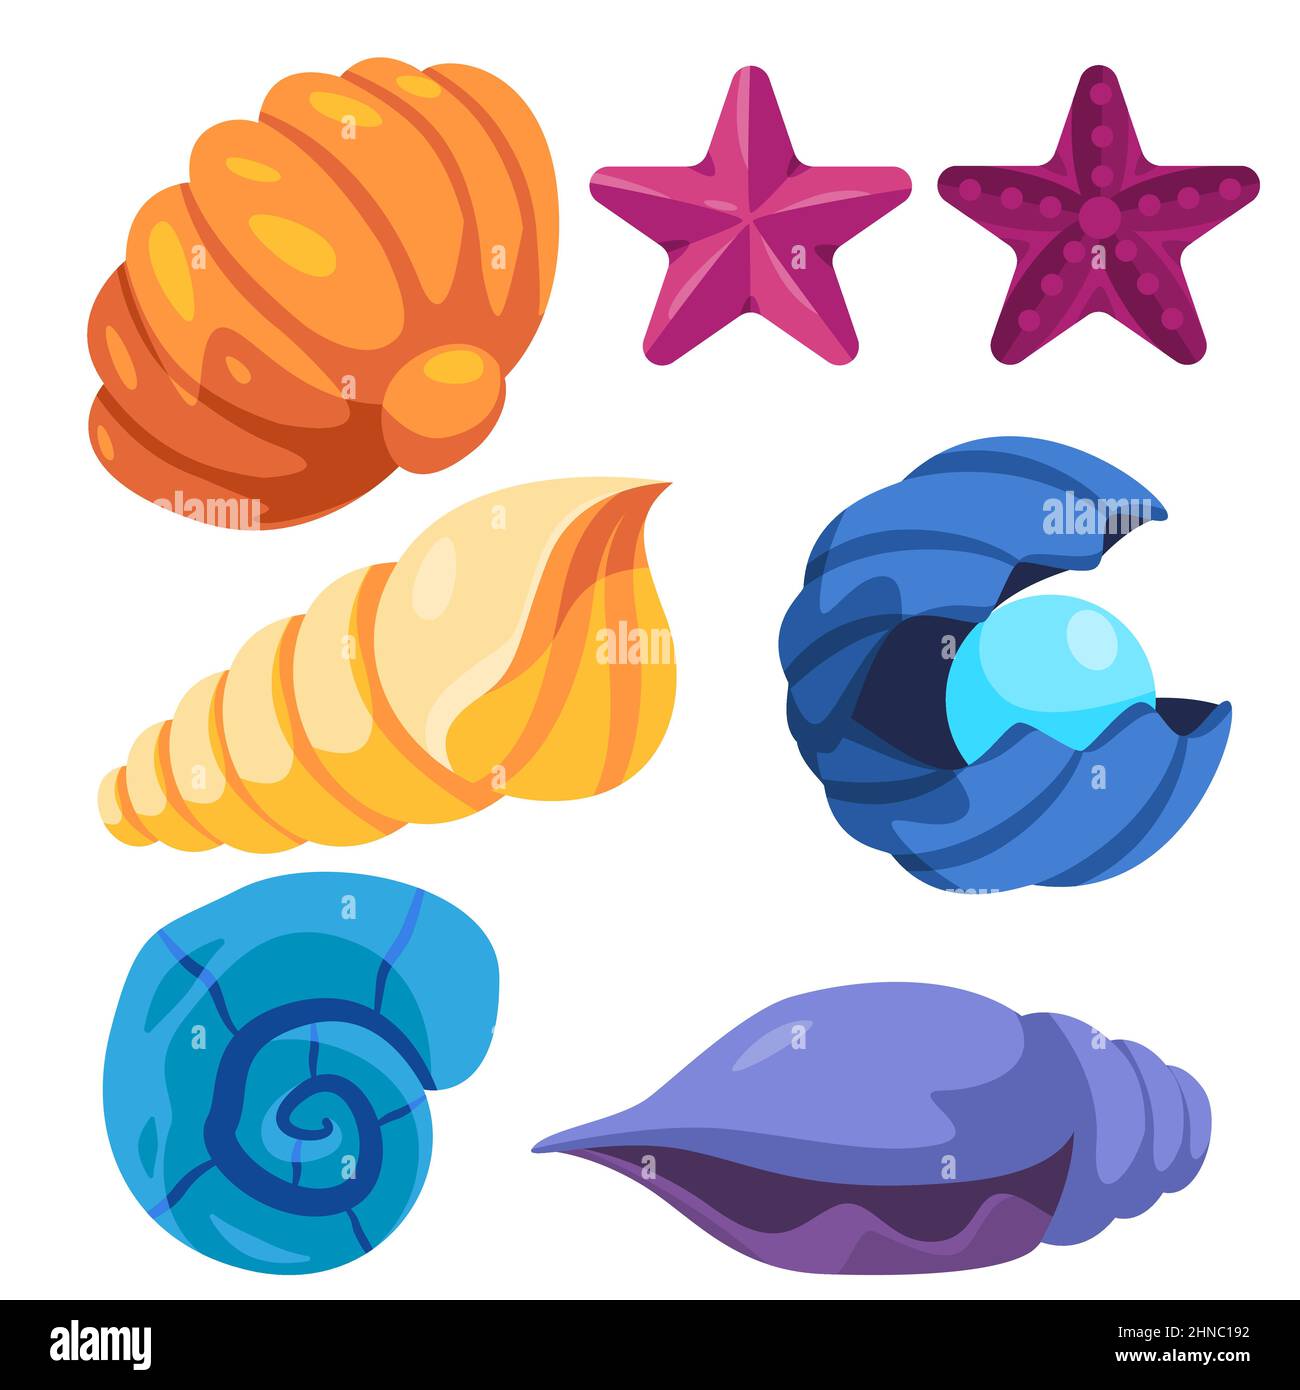 Meeresmuschel Muschel Muschel Seesterne Schnecke Unterwasser aquatischen marinen Objekt Illustration in farbenfroher Natur Stock Vektor